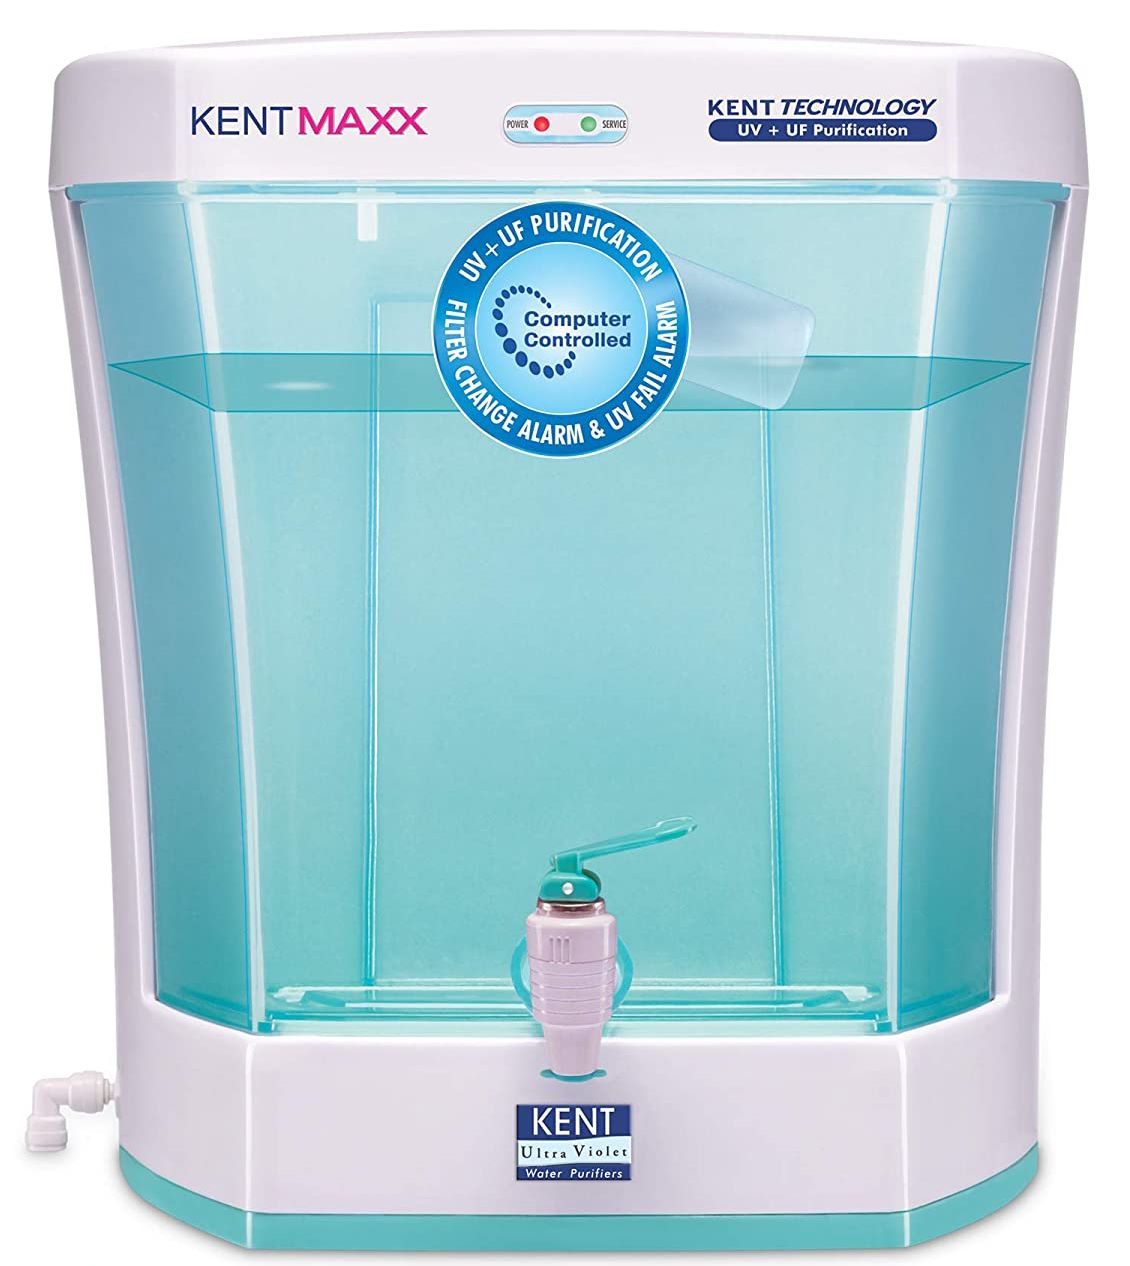 KENT Max UV Water Purifier